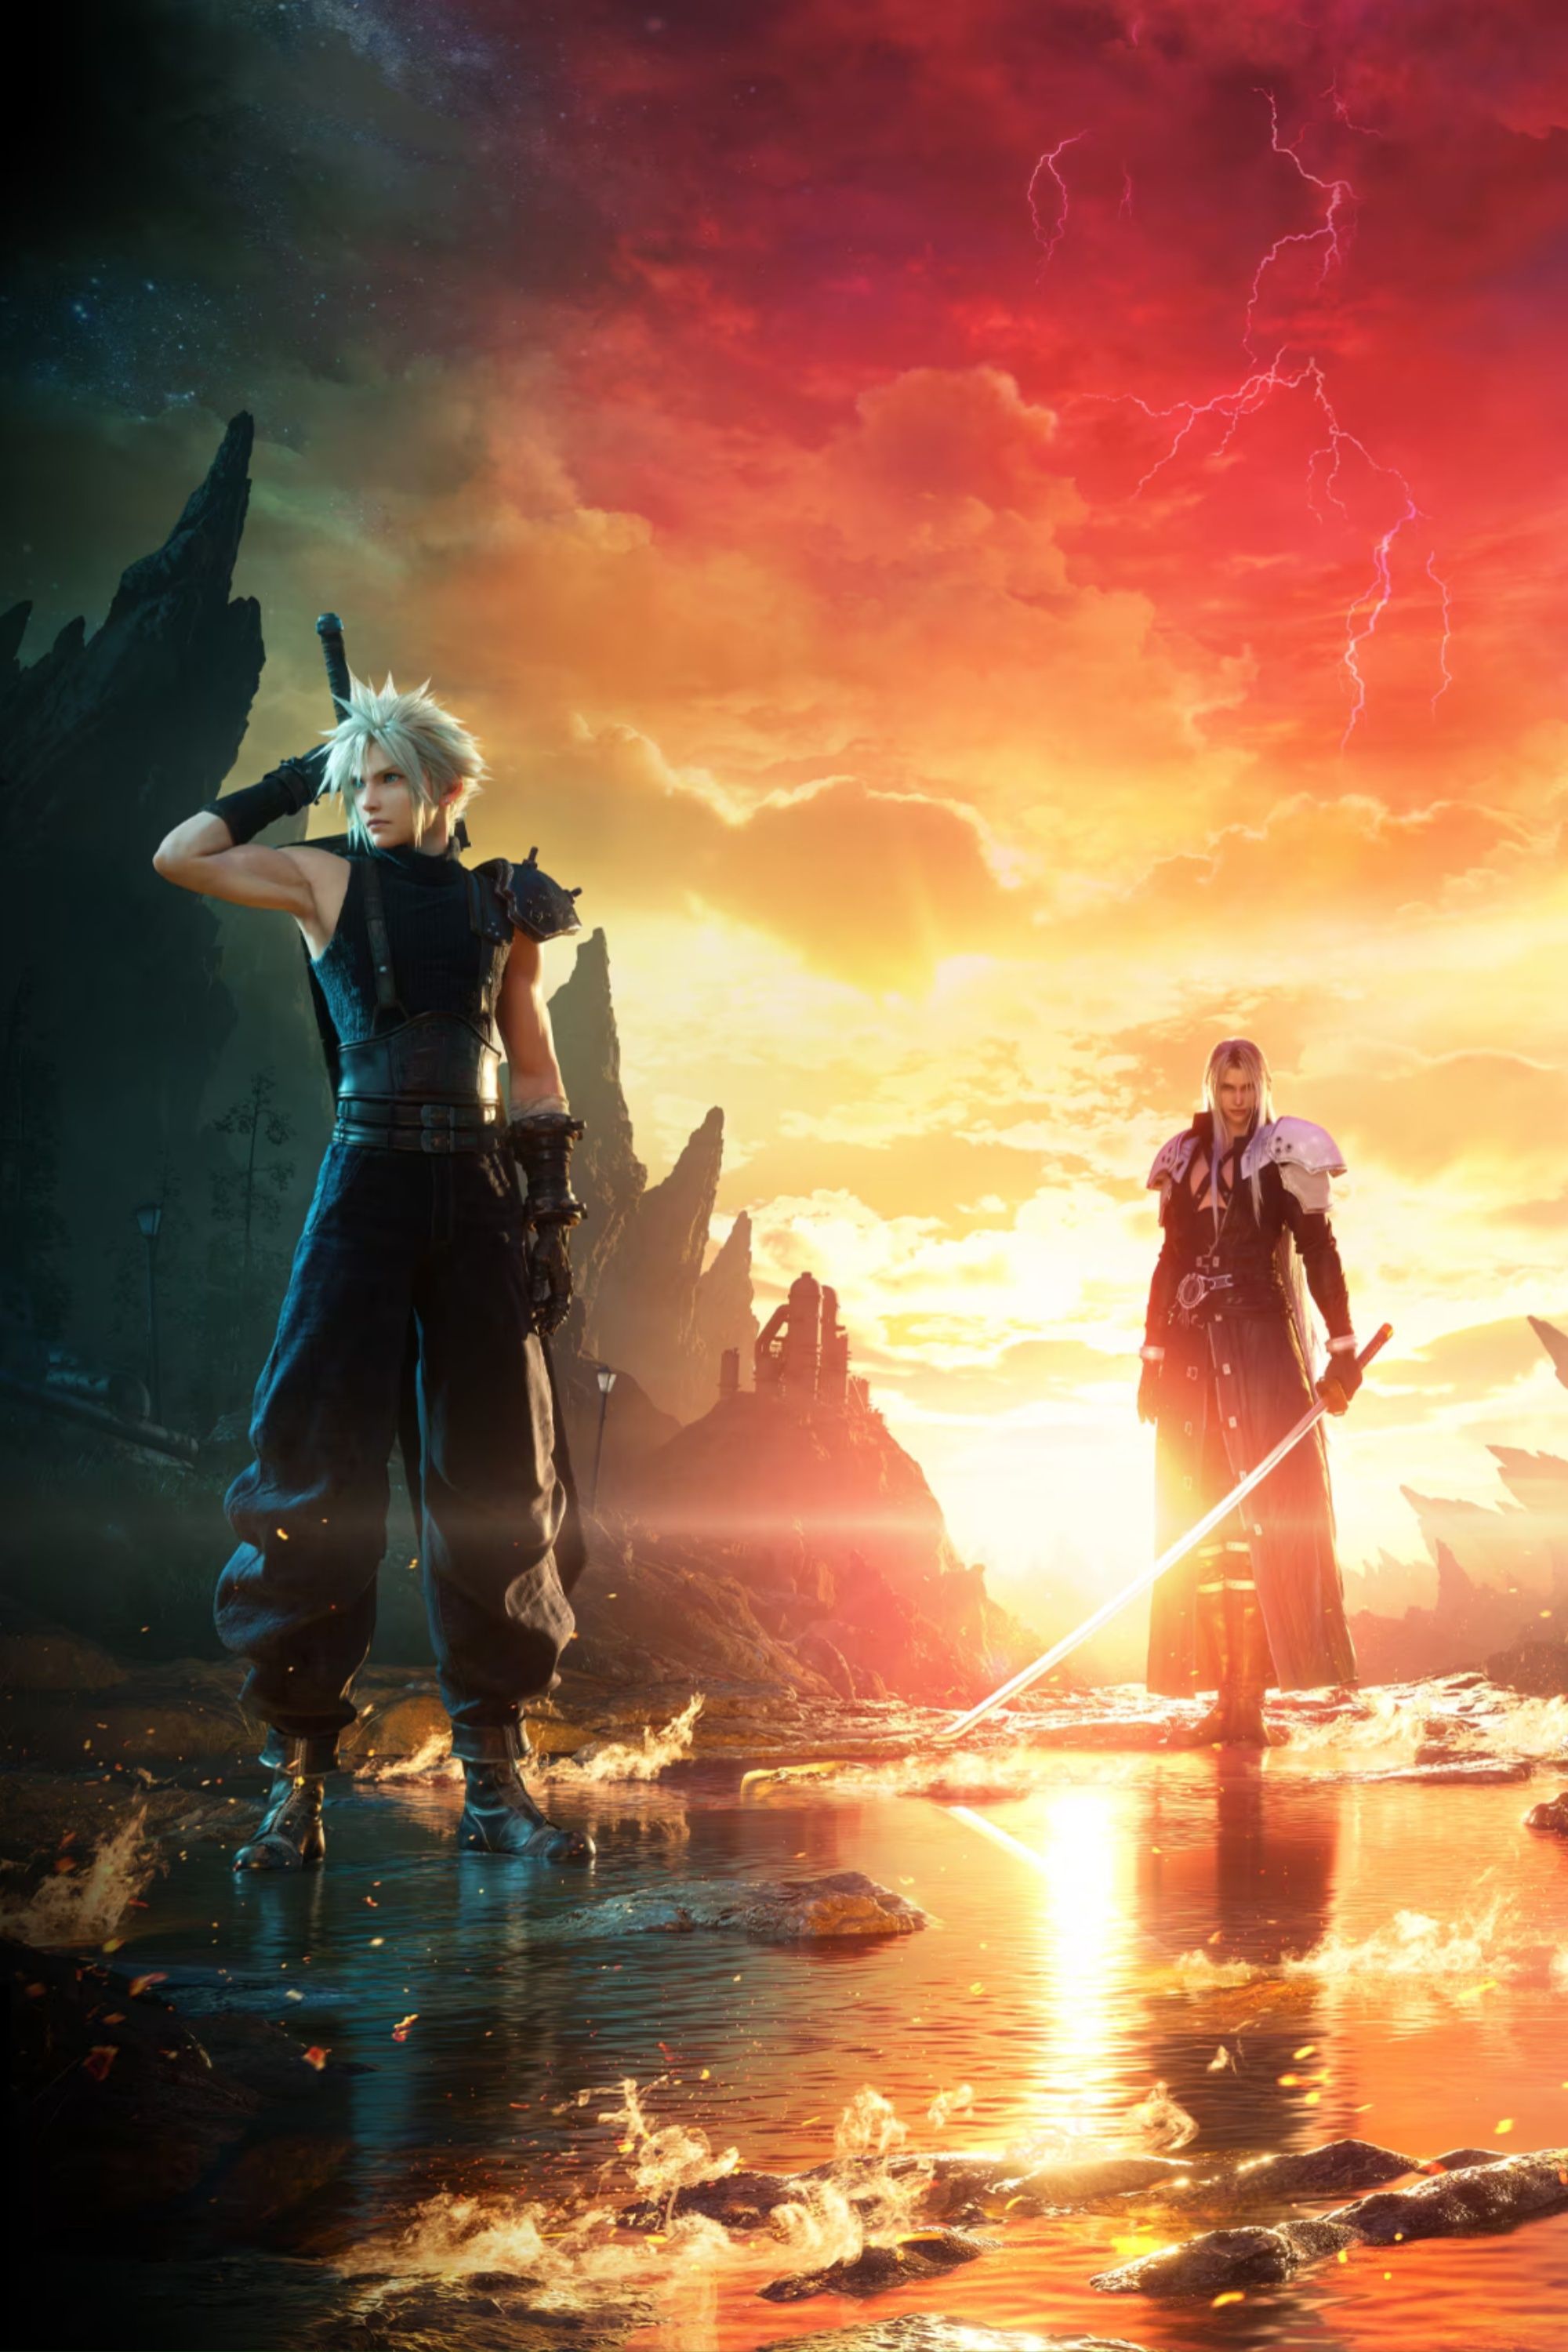 Final Fantasy VII Rebirth Standard Edition PlayStation 5 - Best Buy